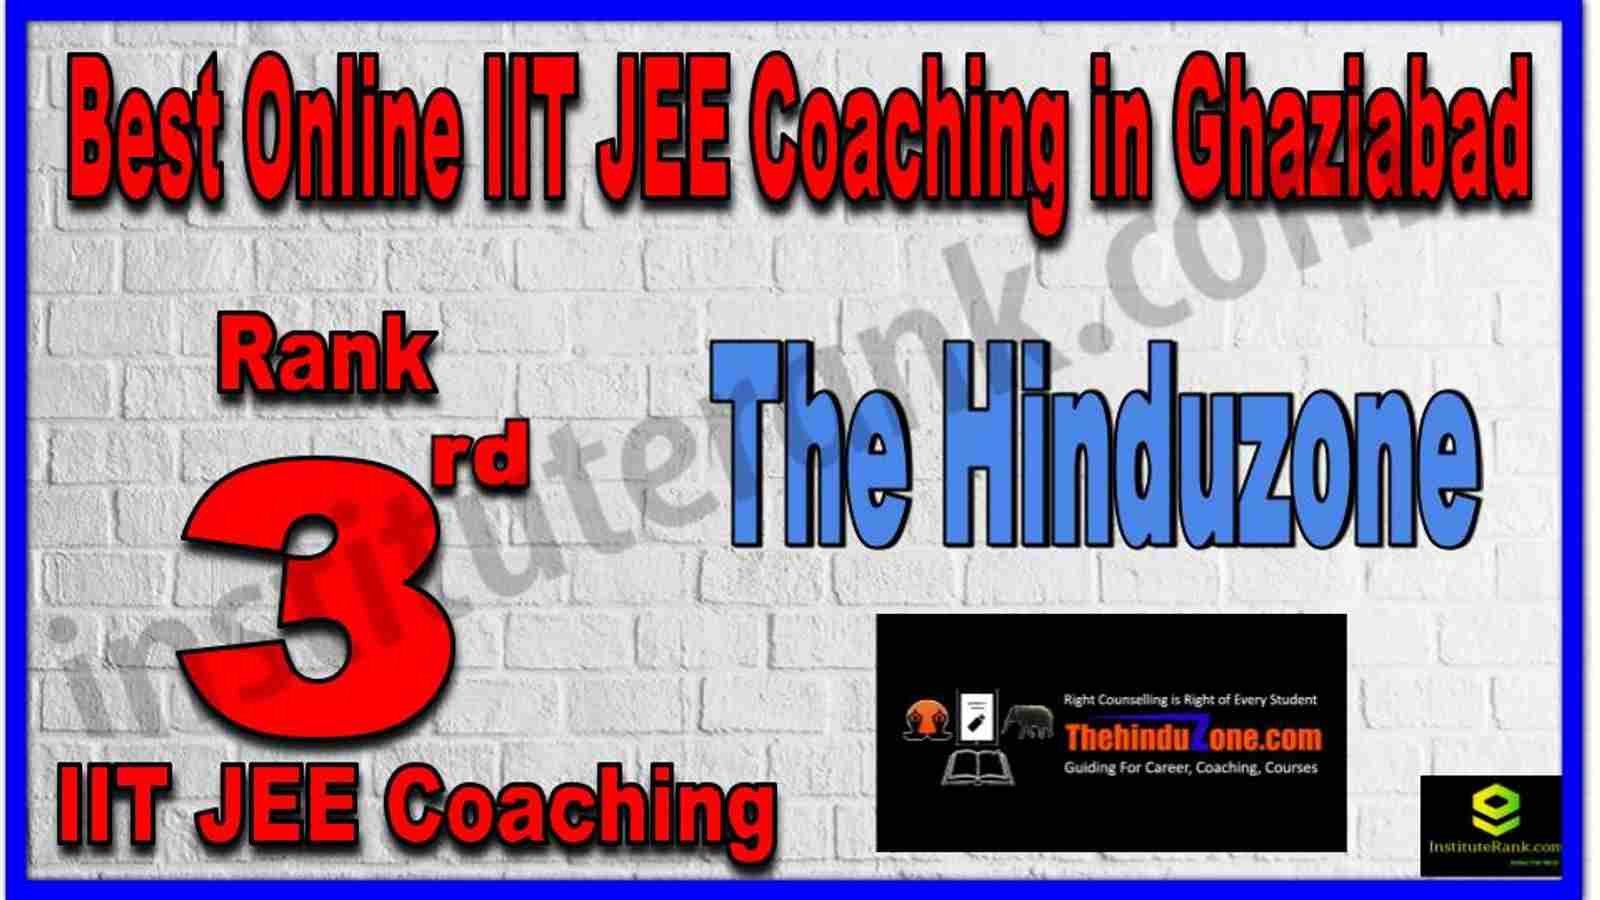 Rank 3rd Best Online IIT JEE Coaching in Ghaziabad